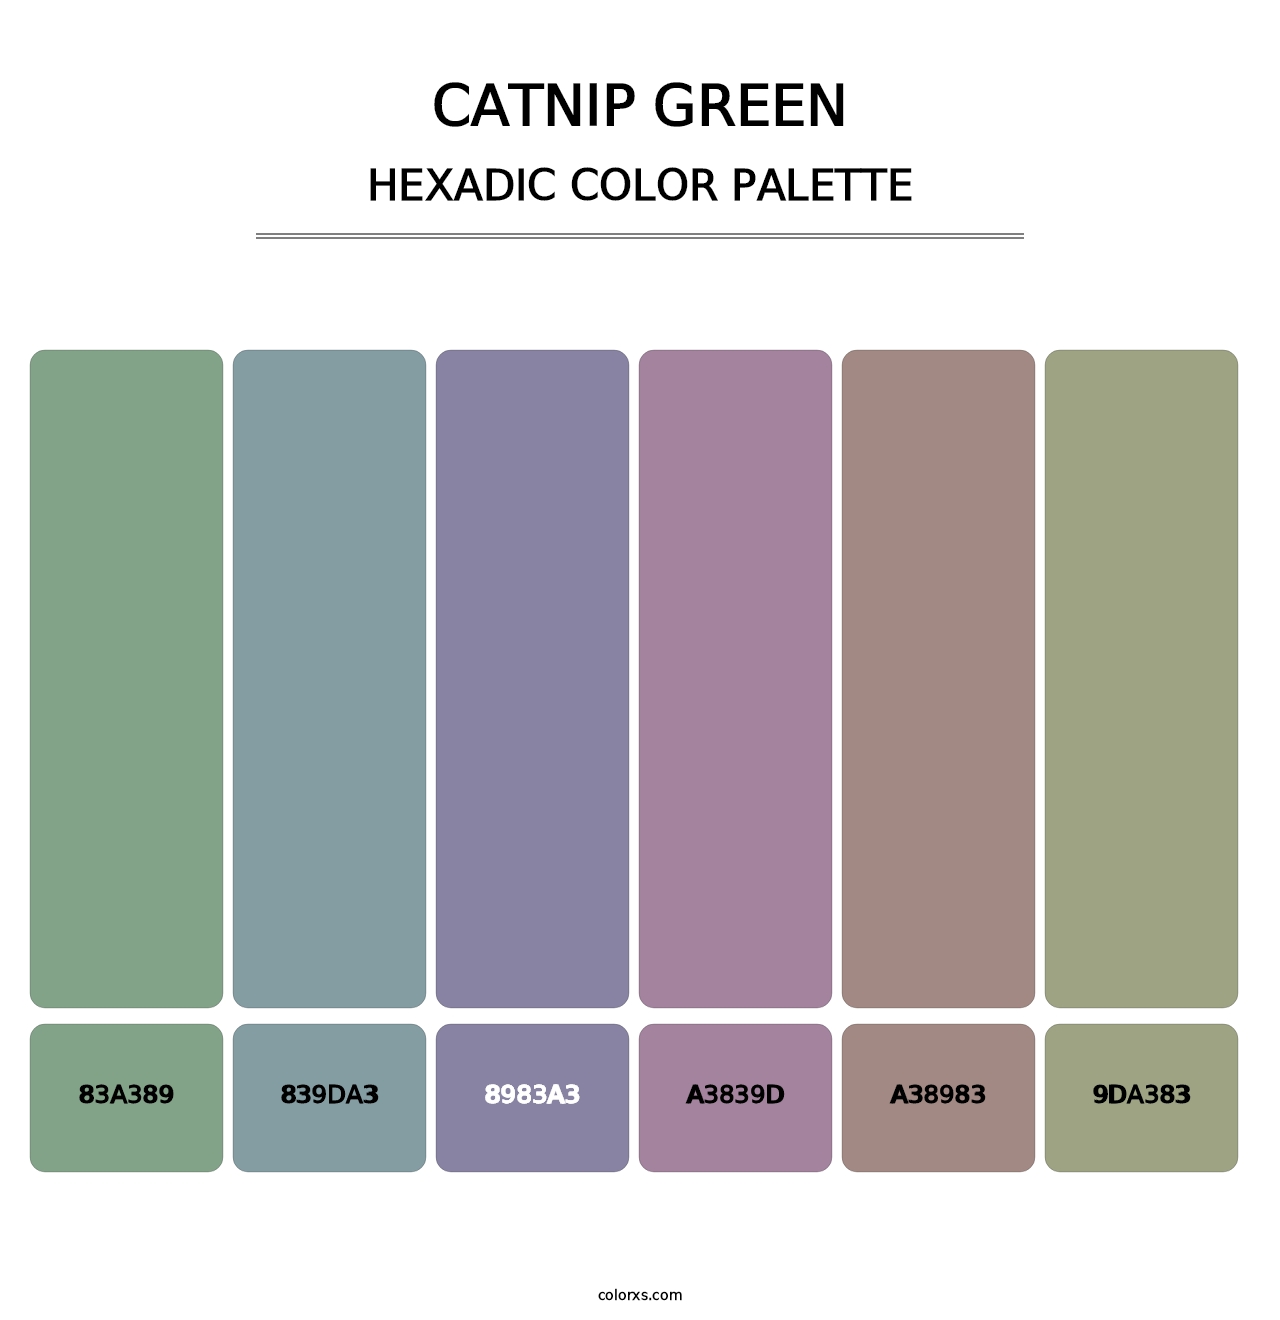 Catnip Green - Hexadic Color Palette